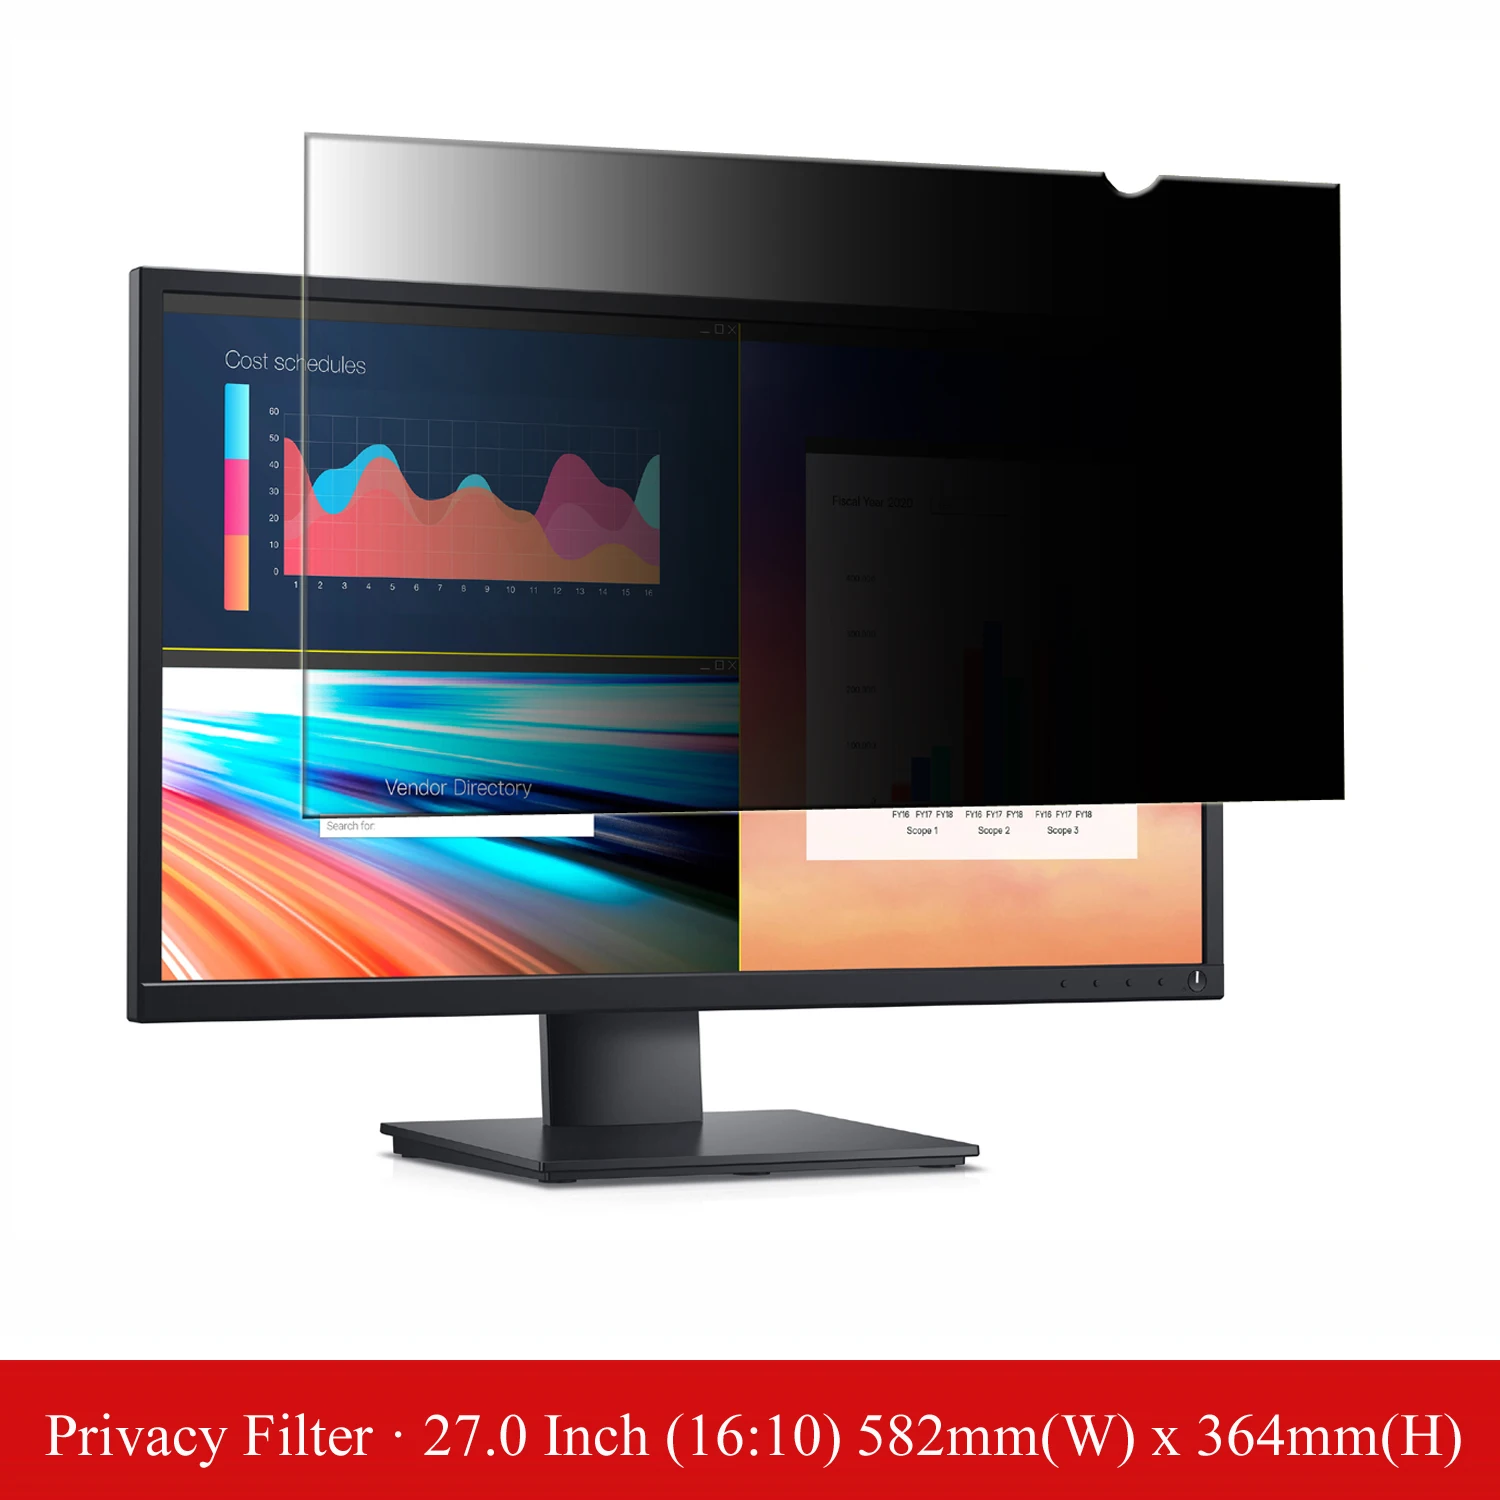 Фото 27 inch Anti-Glare Computer Privacy Filter Screen Protector Film for Desktop Monitor Widescreen 16:10 Aspect Ratio | Компьютеры и офис